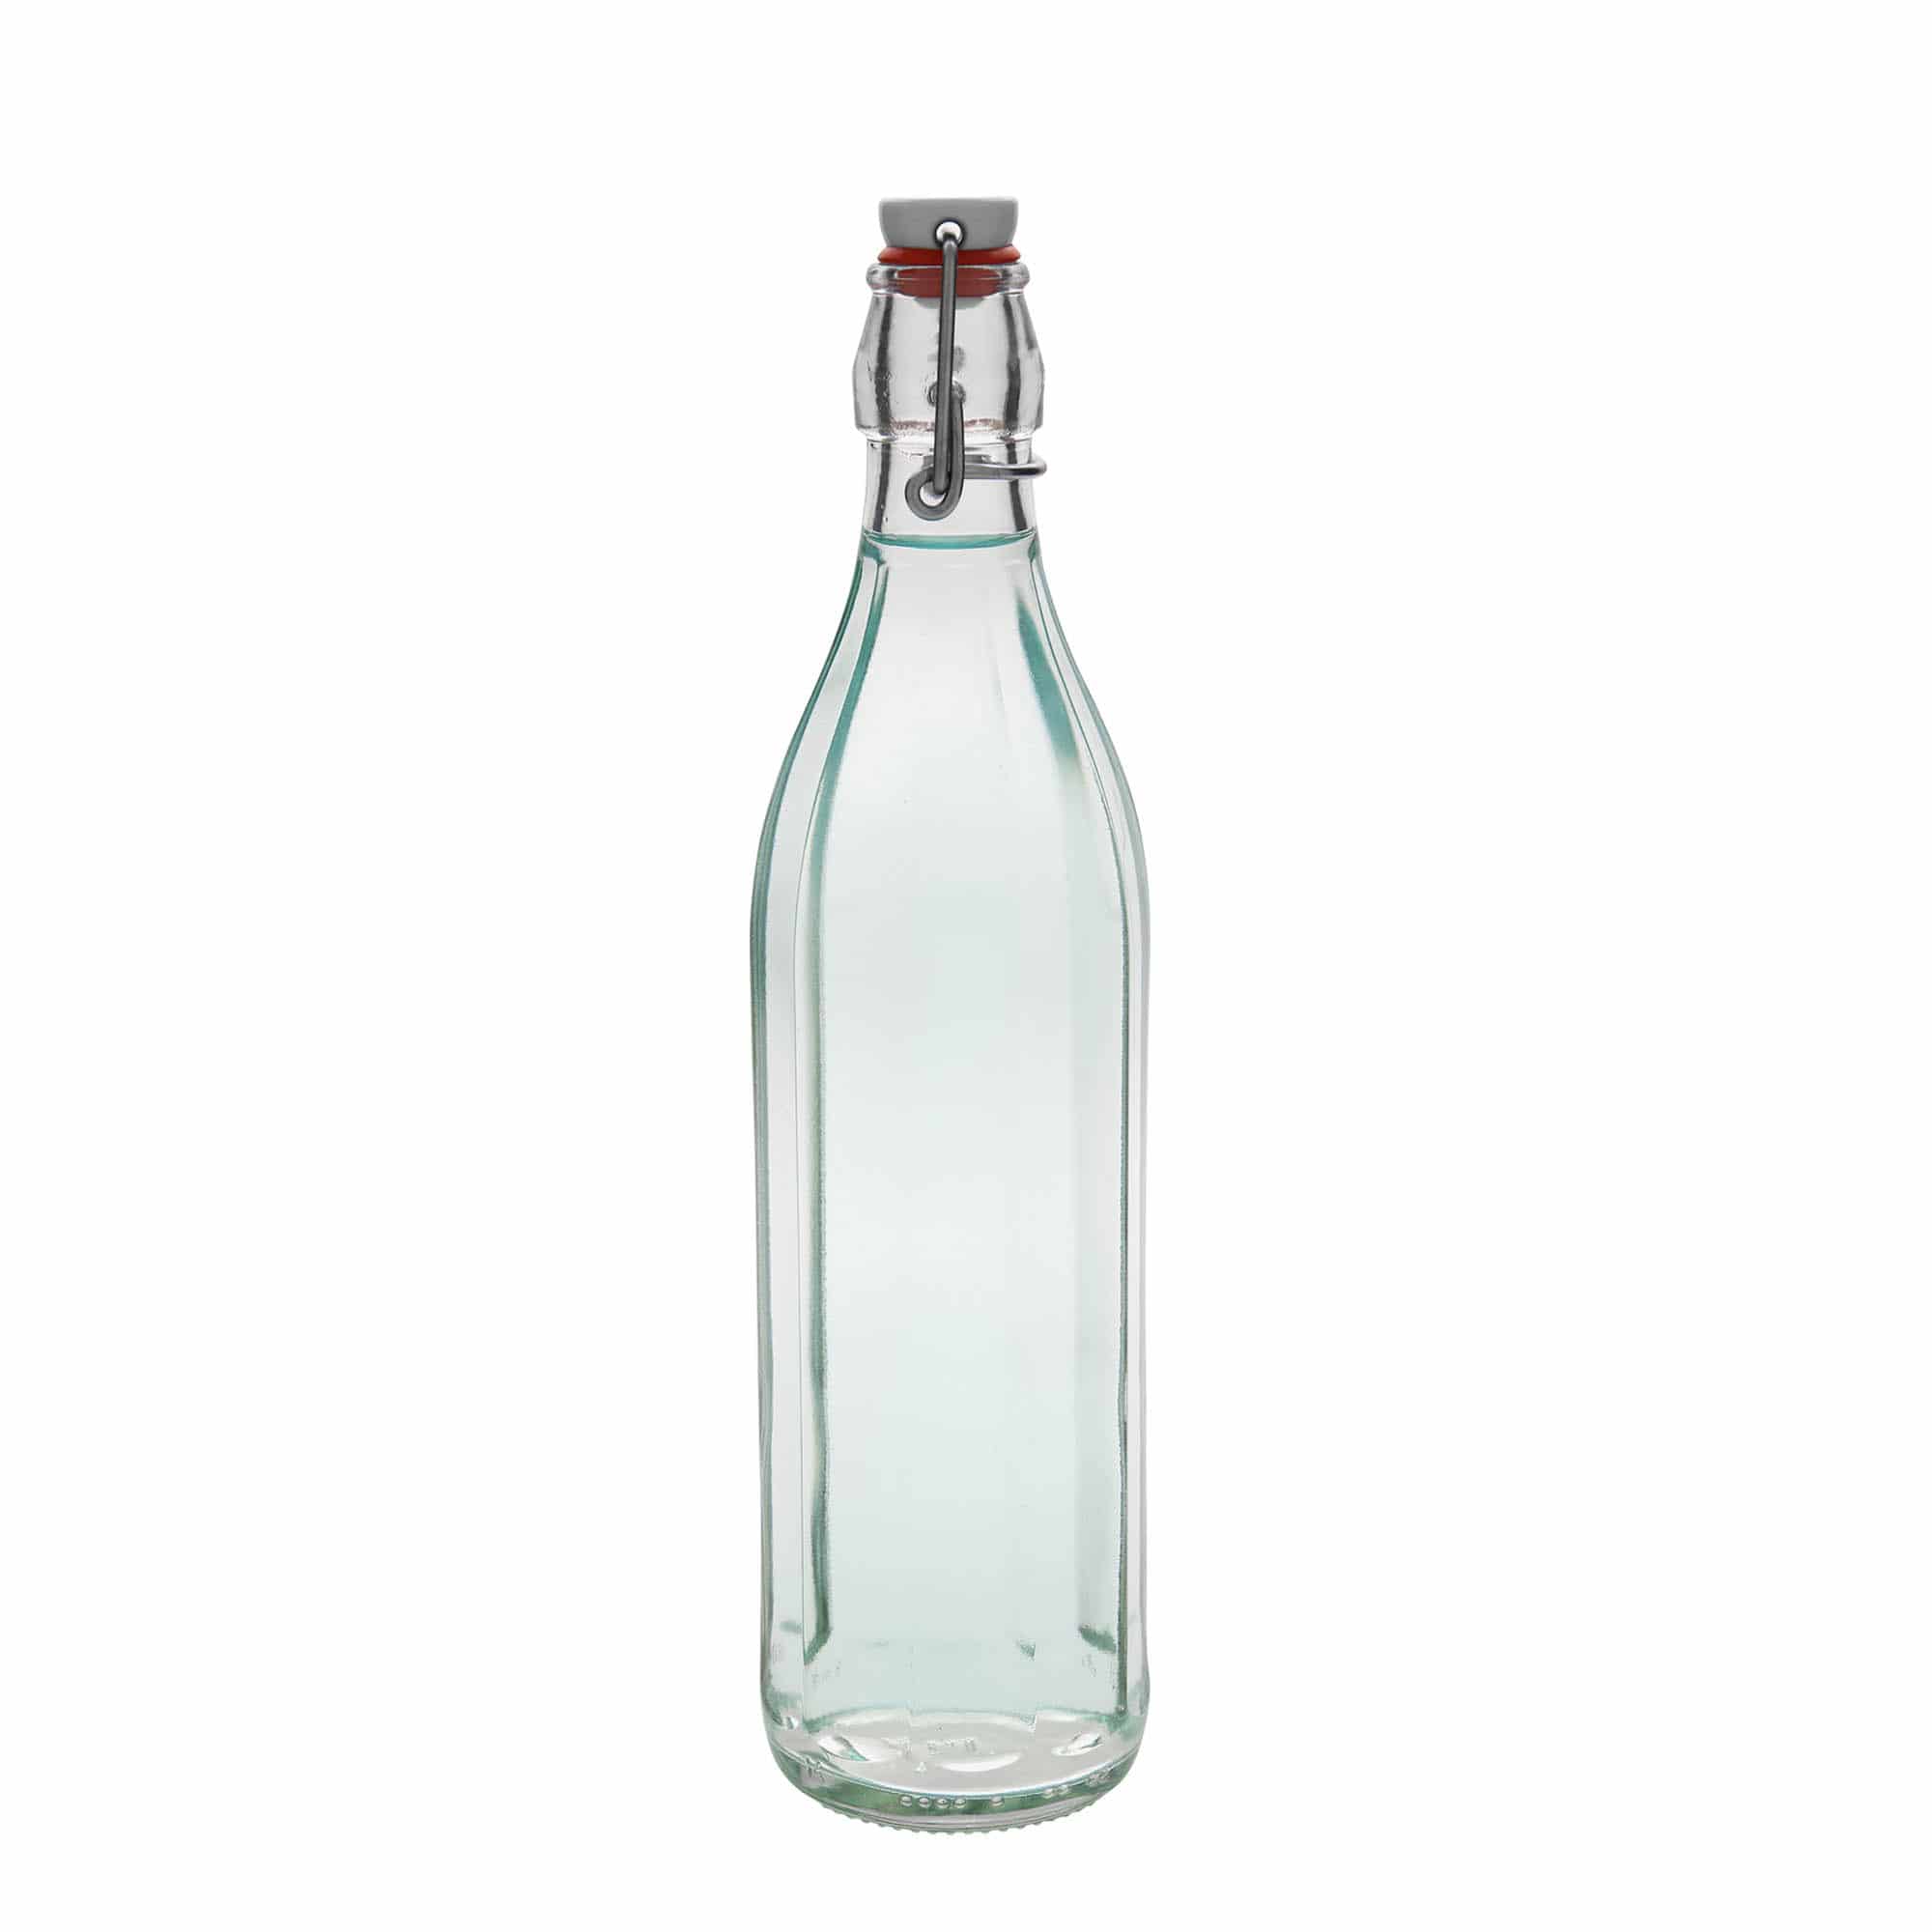 750 ml glass bottle 'Bravo', ten-sided, closure: swing top